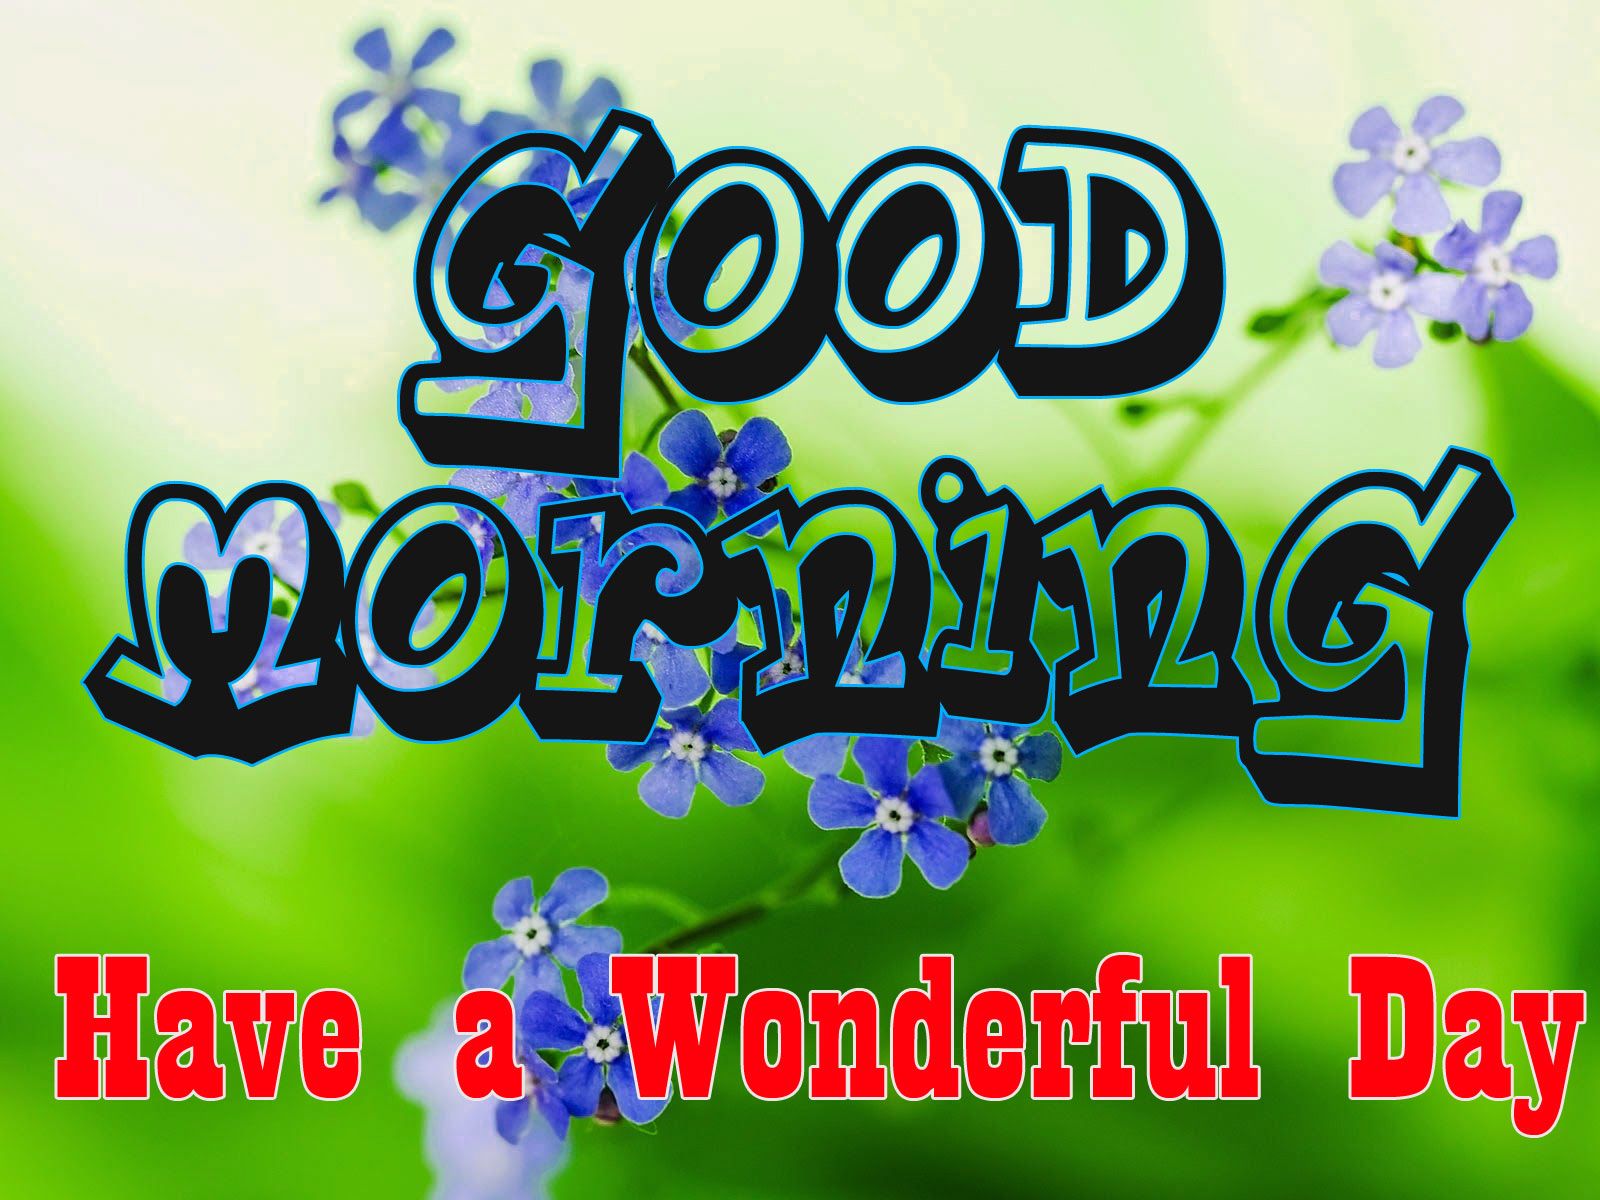 Good Morning 3D Photo Image Download Morning Image